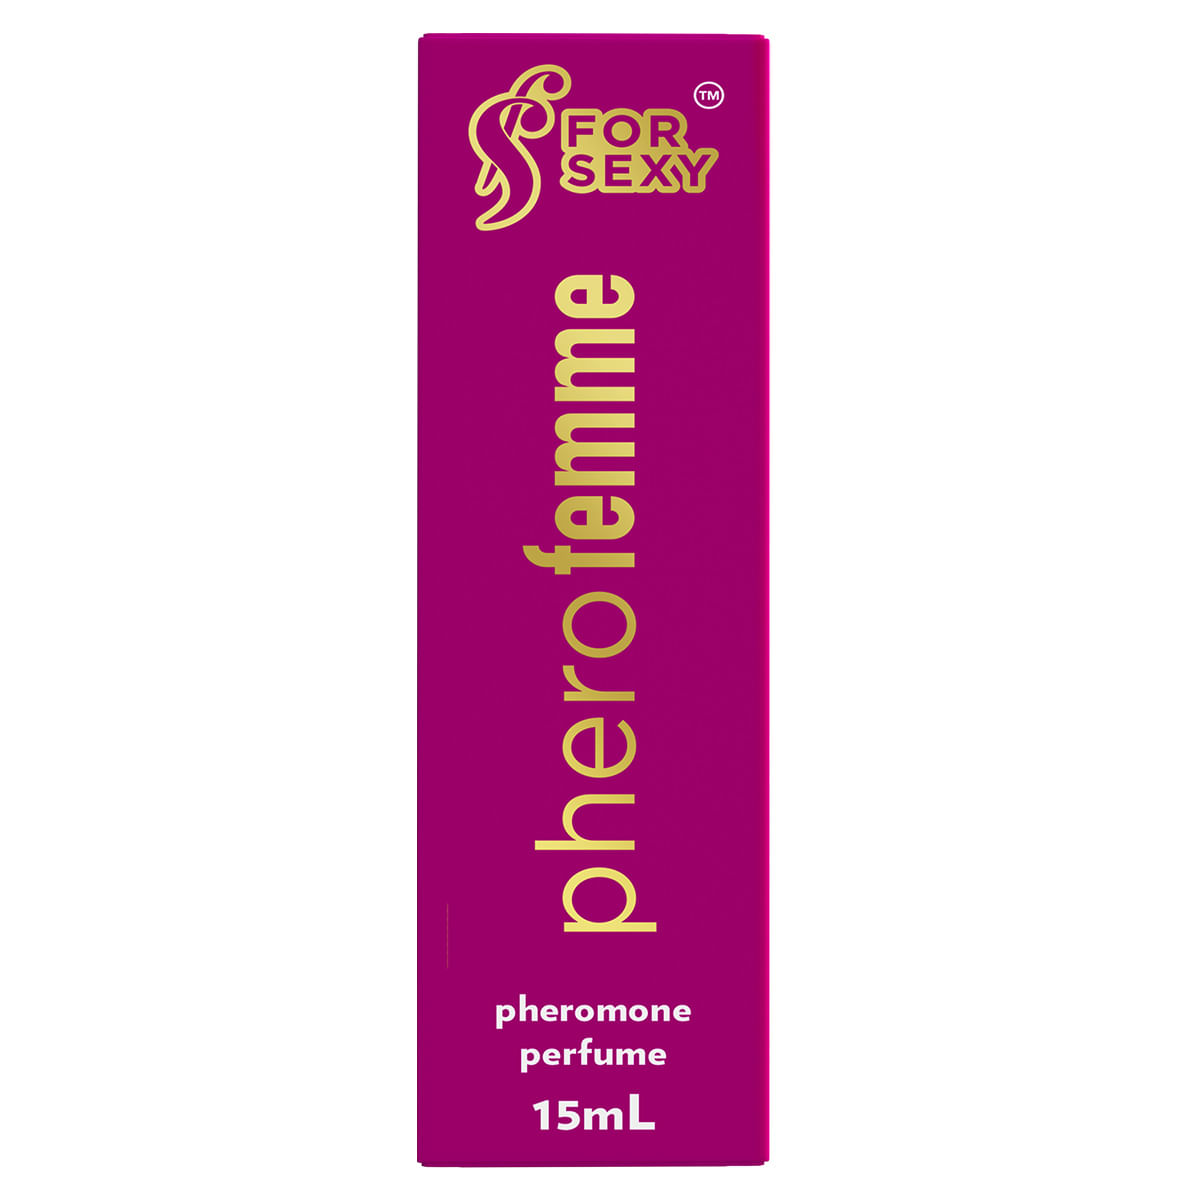 Pherofemme Perfume Feminino 15ml For Sexy